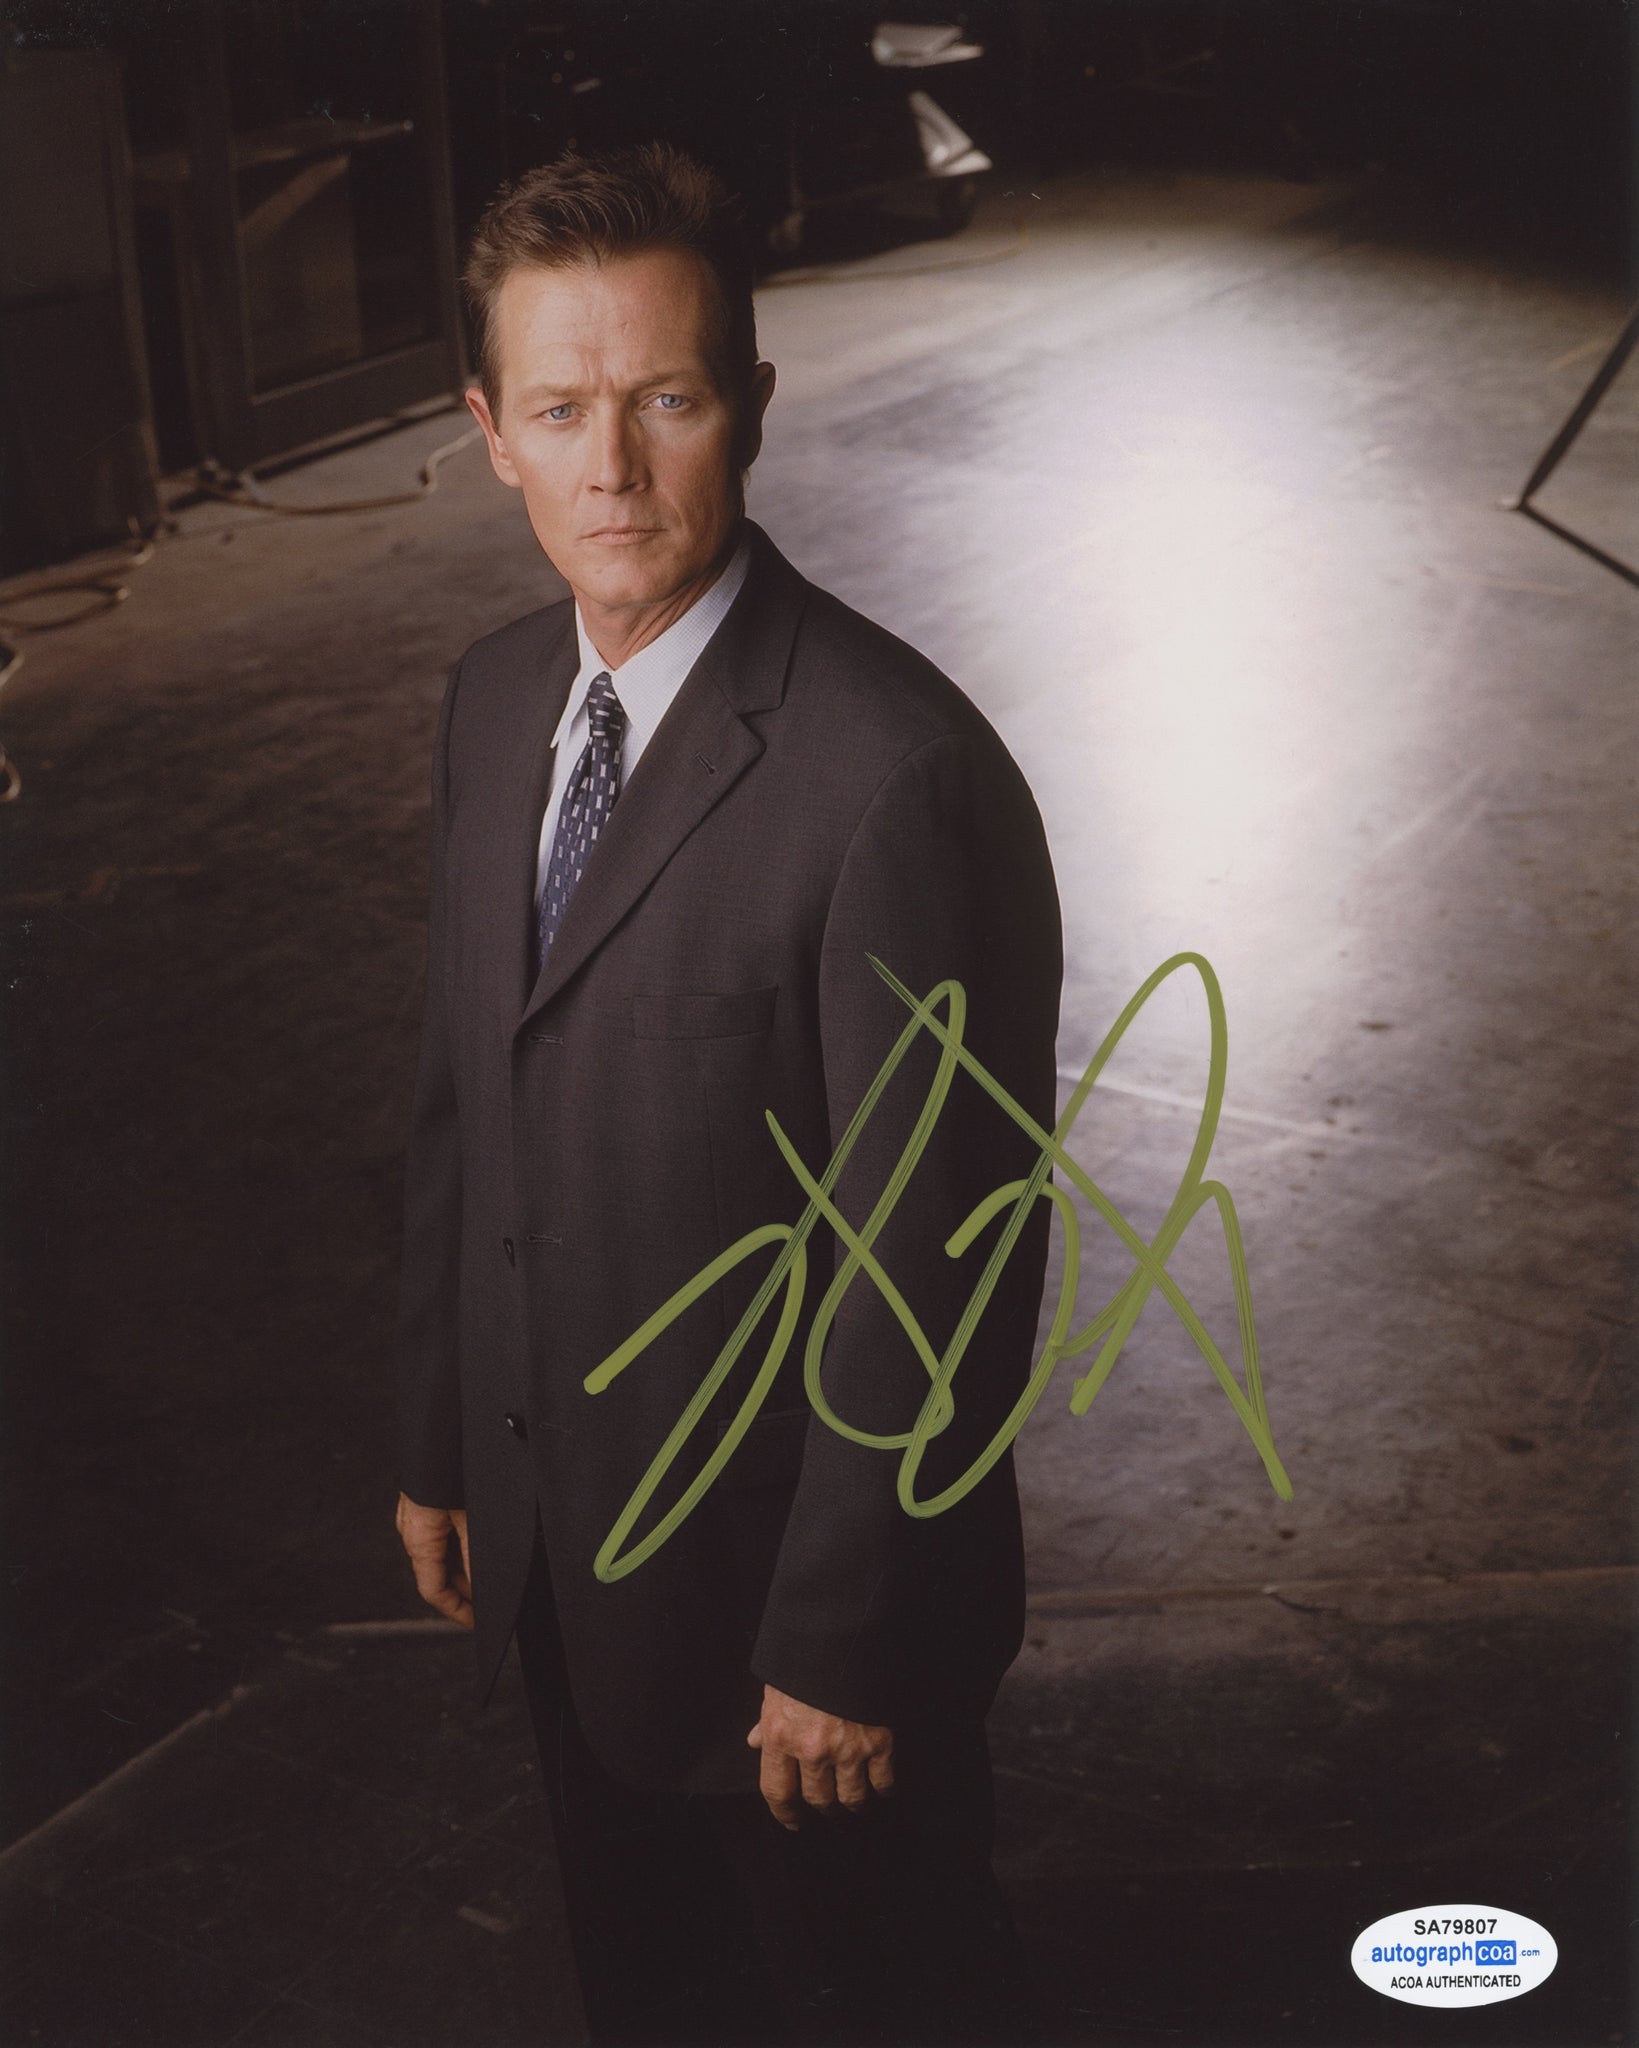 Robert Patrick X-Files Signed Autograph 8x10 Photo ACOA